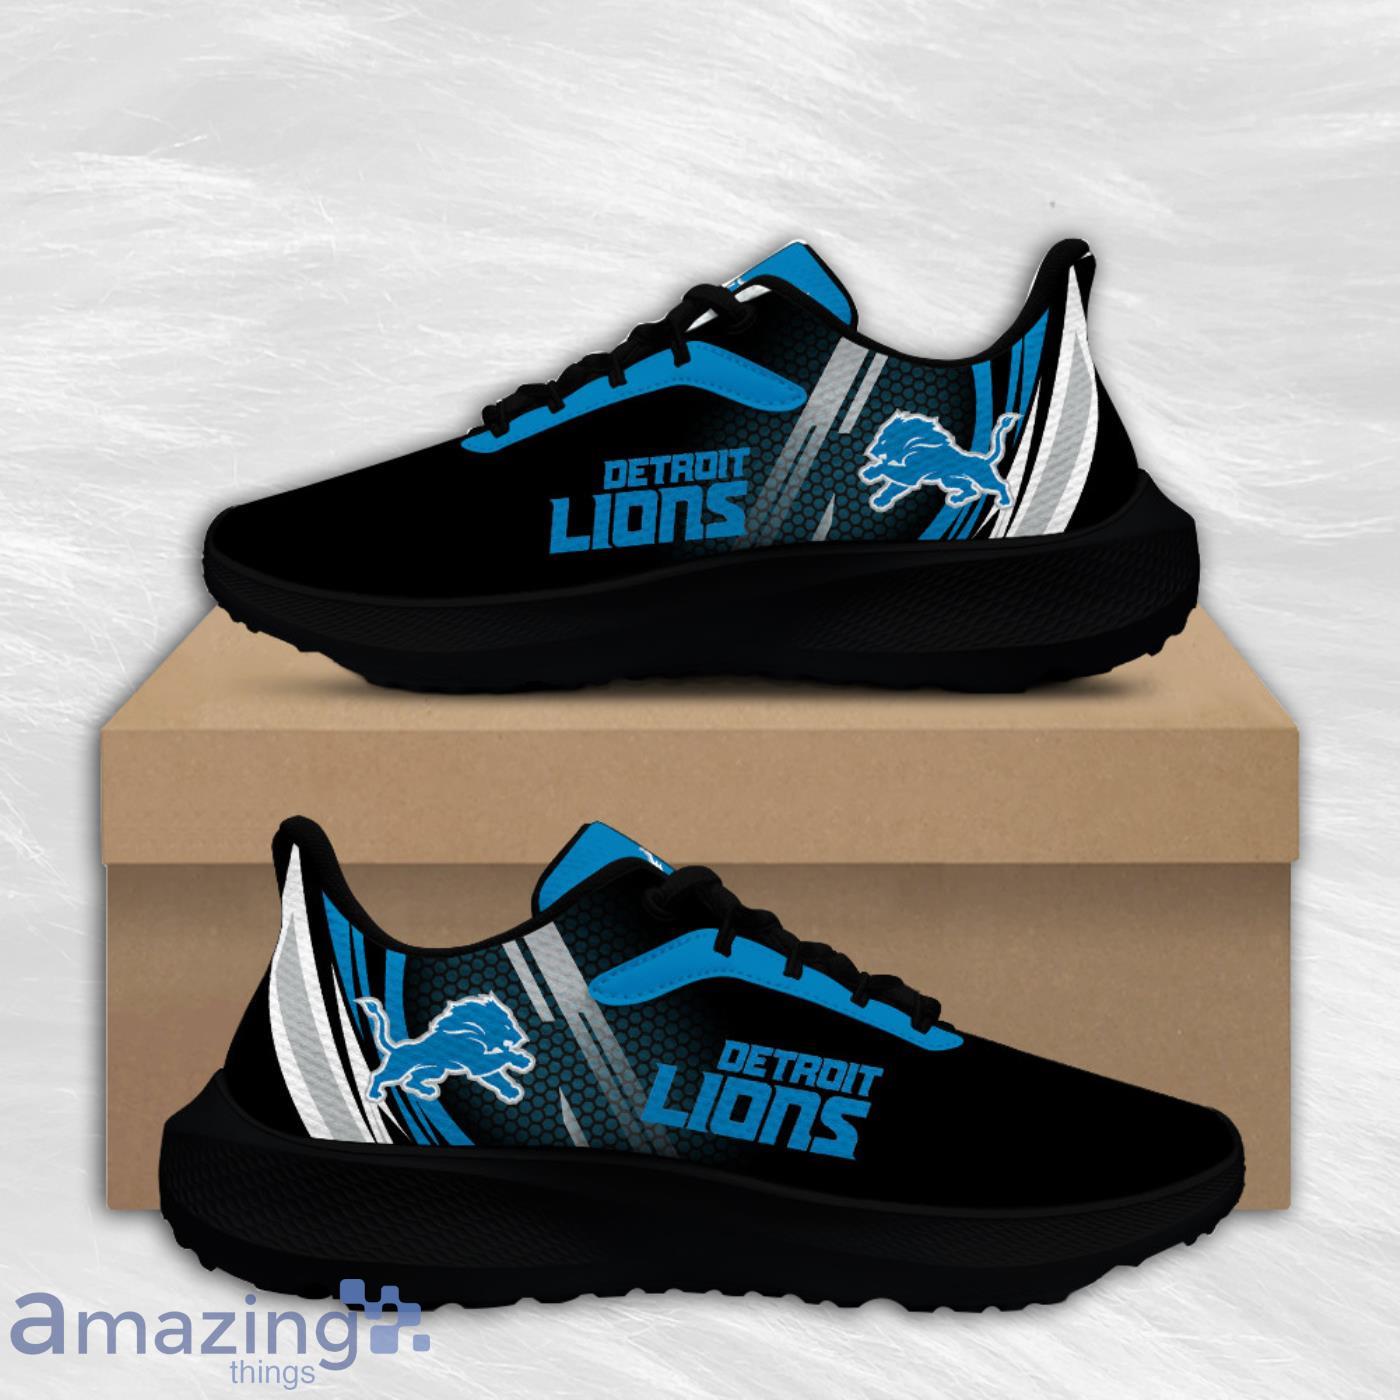 Detroit Lions Air Mesh Running Shoes Unique Gift For Men And Women Fans Product Photo 2